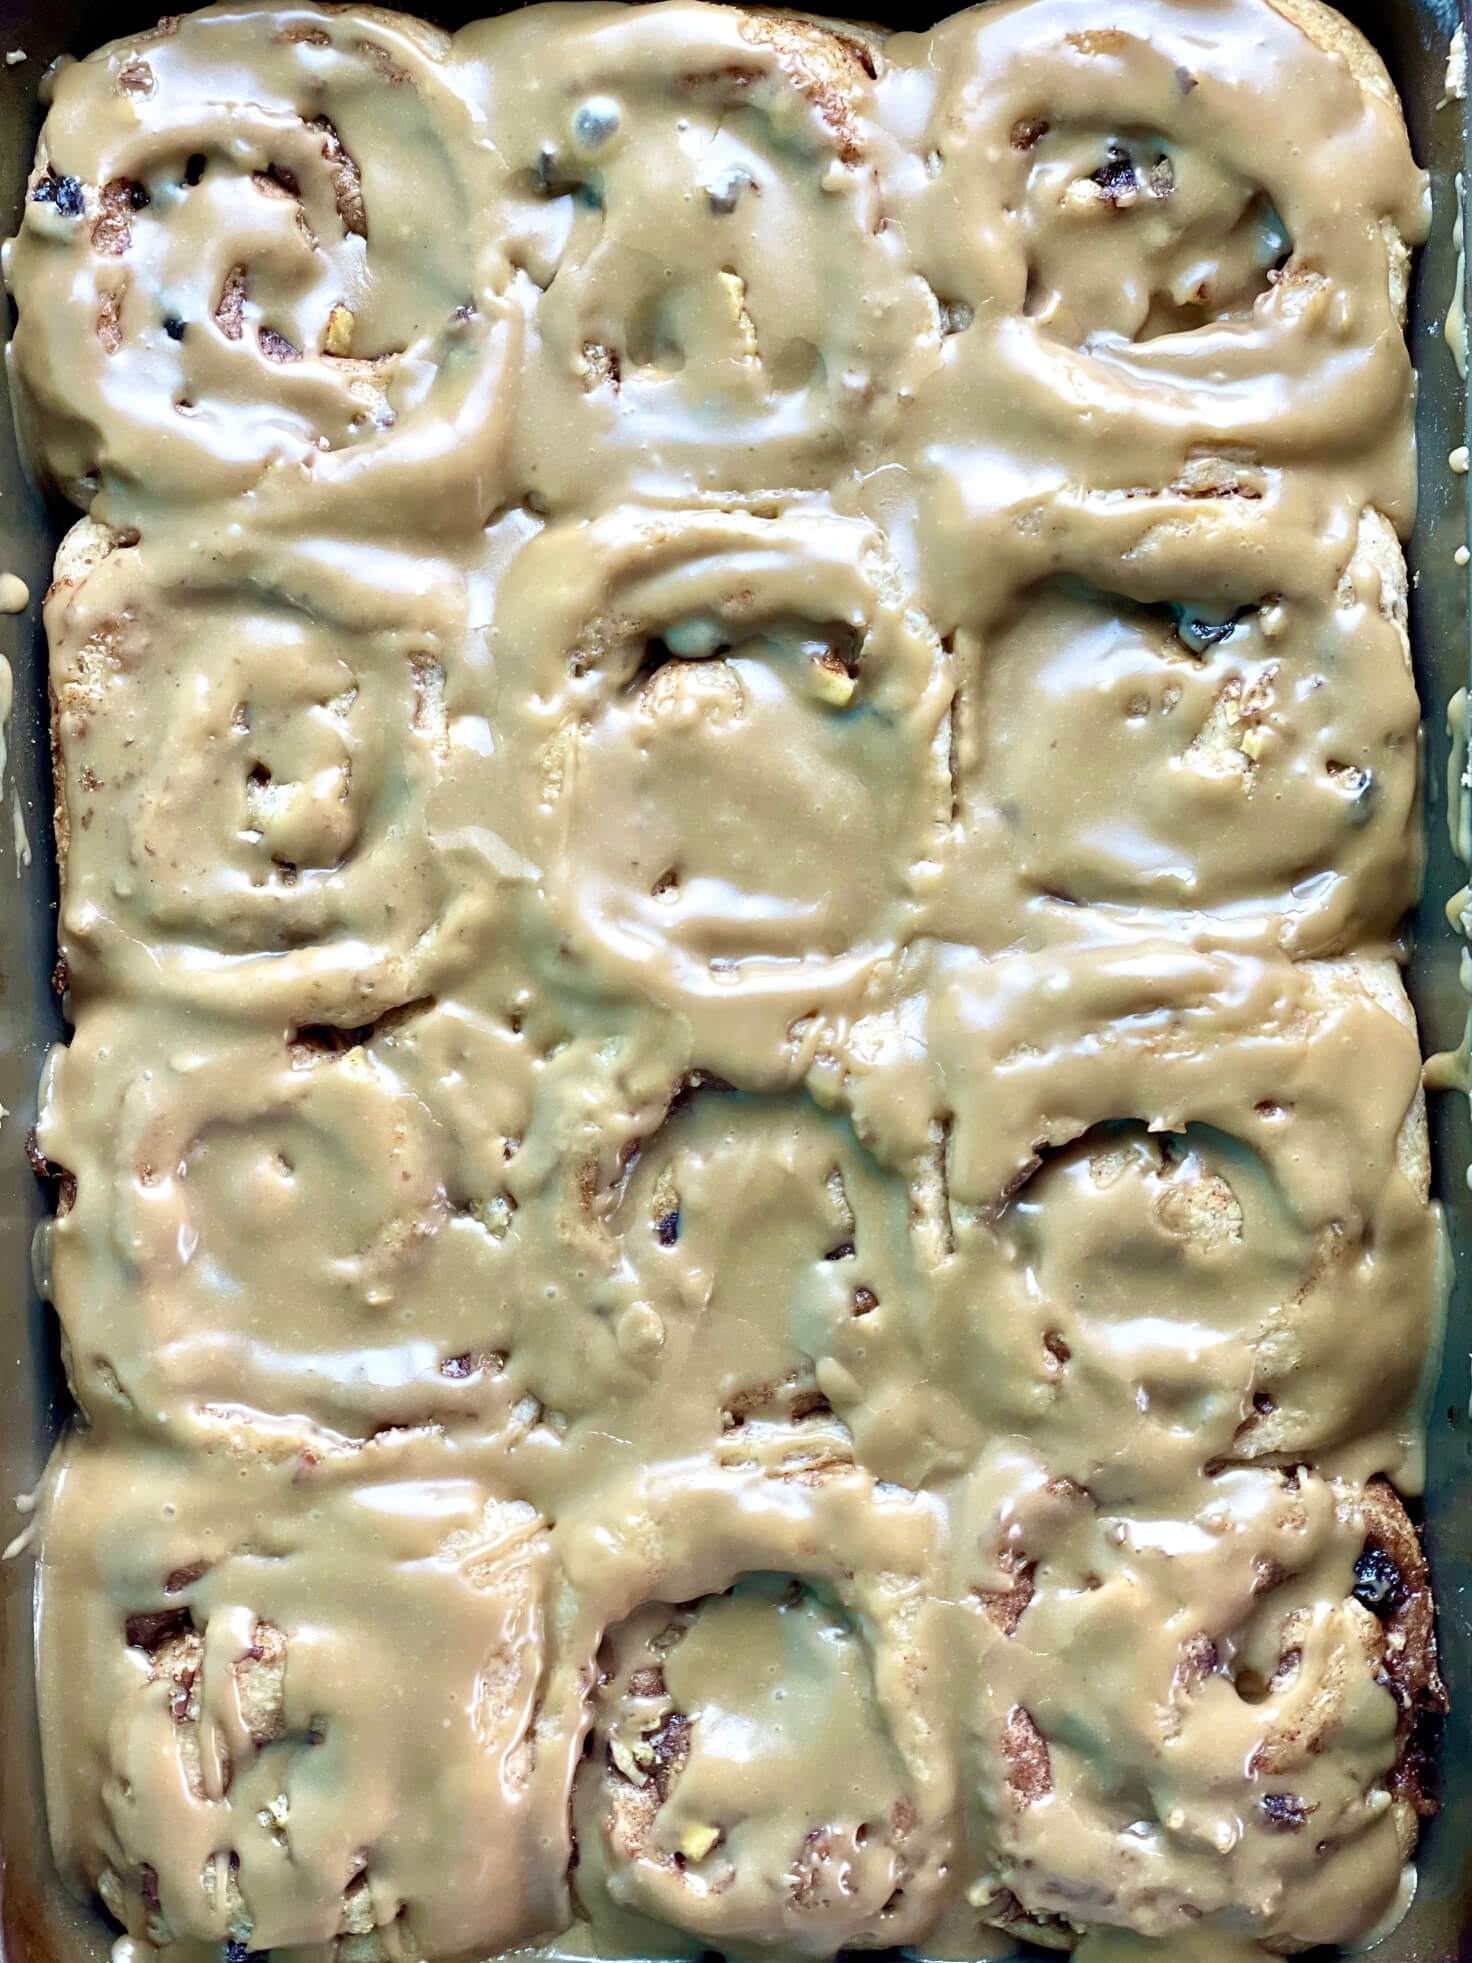 Take and Bake Cinnamon Rolls: a Bakery Recipe - Amycakes Bakes